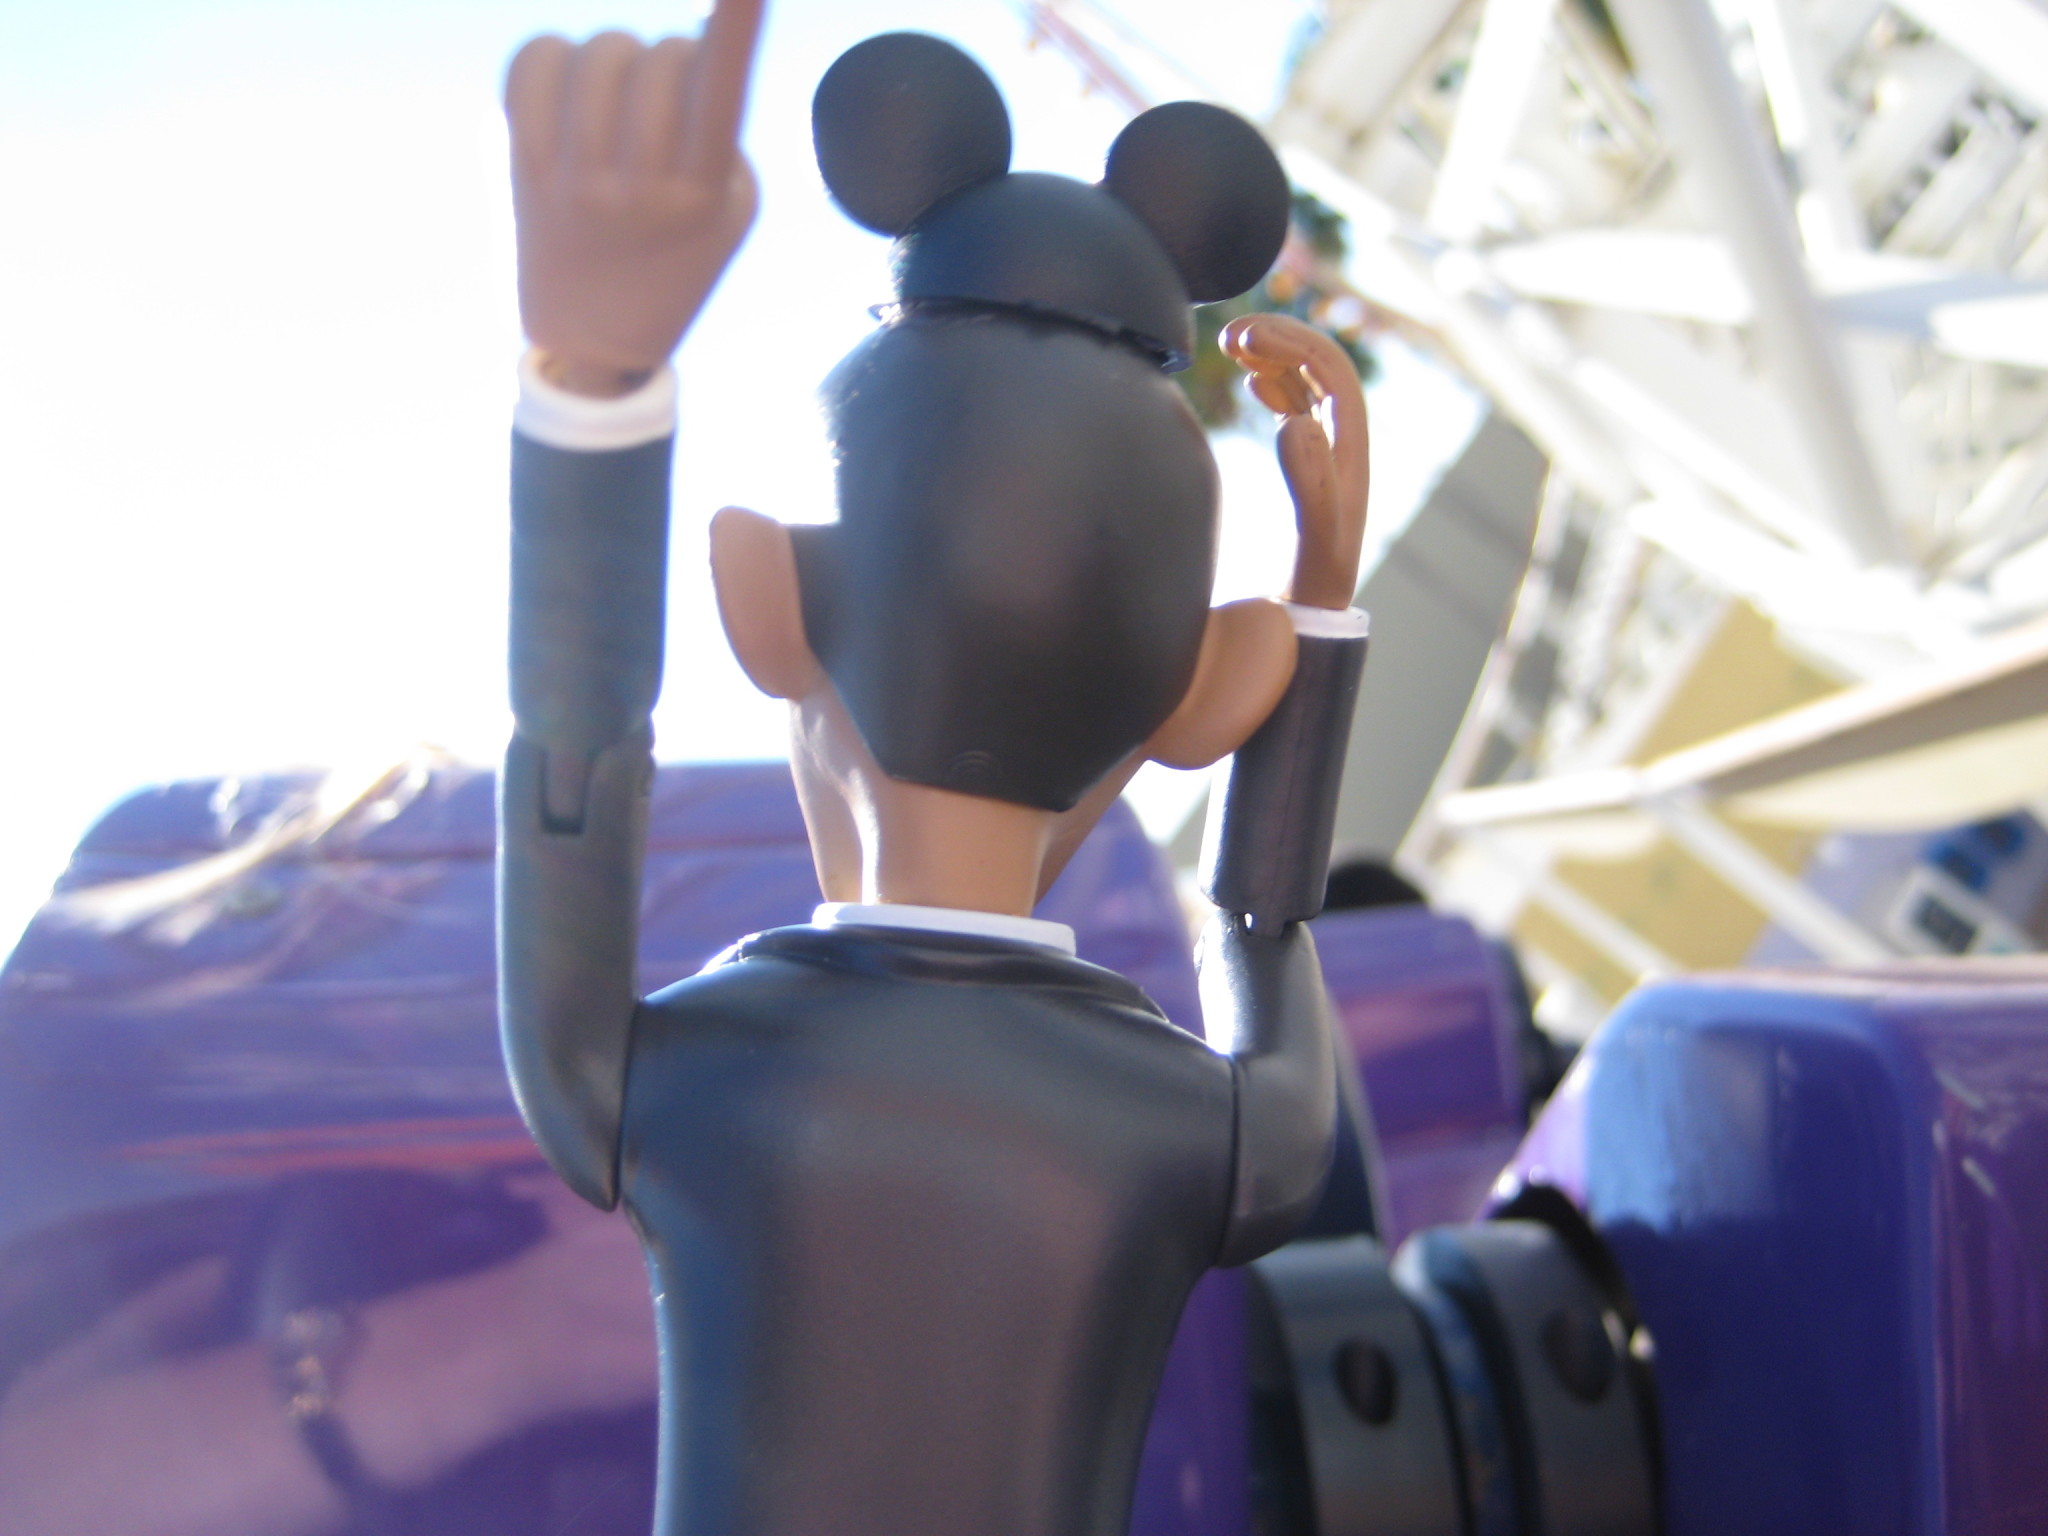 Barack Obama Rides Disneyland’s California Adventure Hollywood Tower of Terror